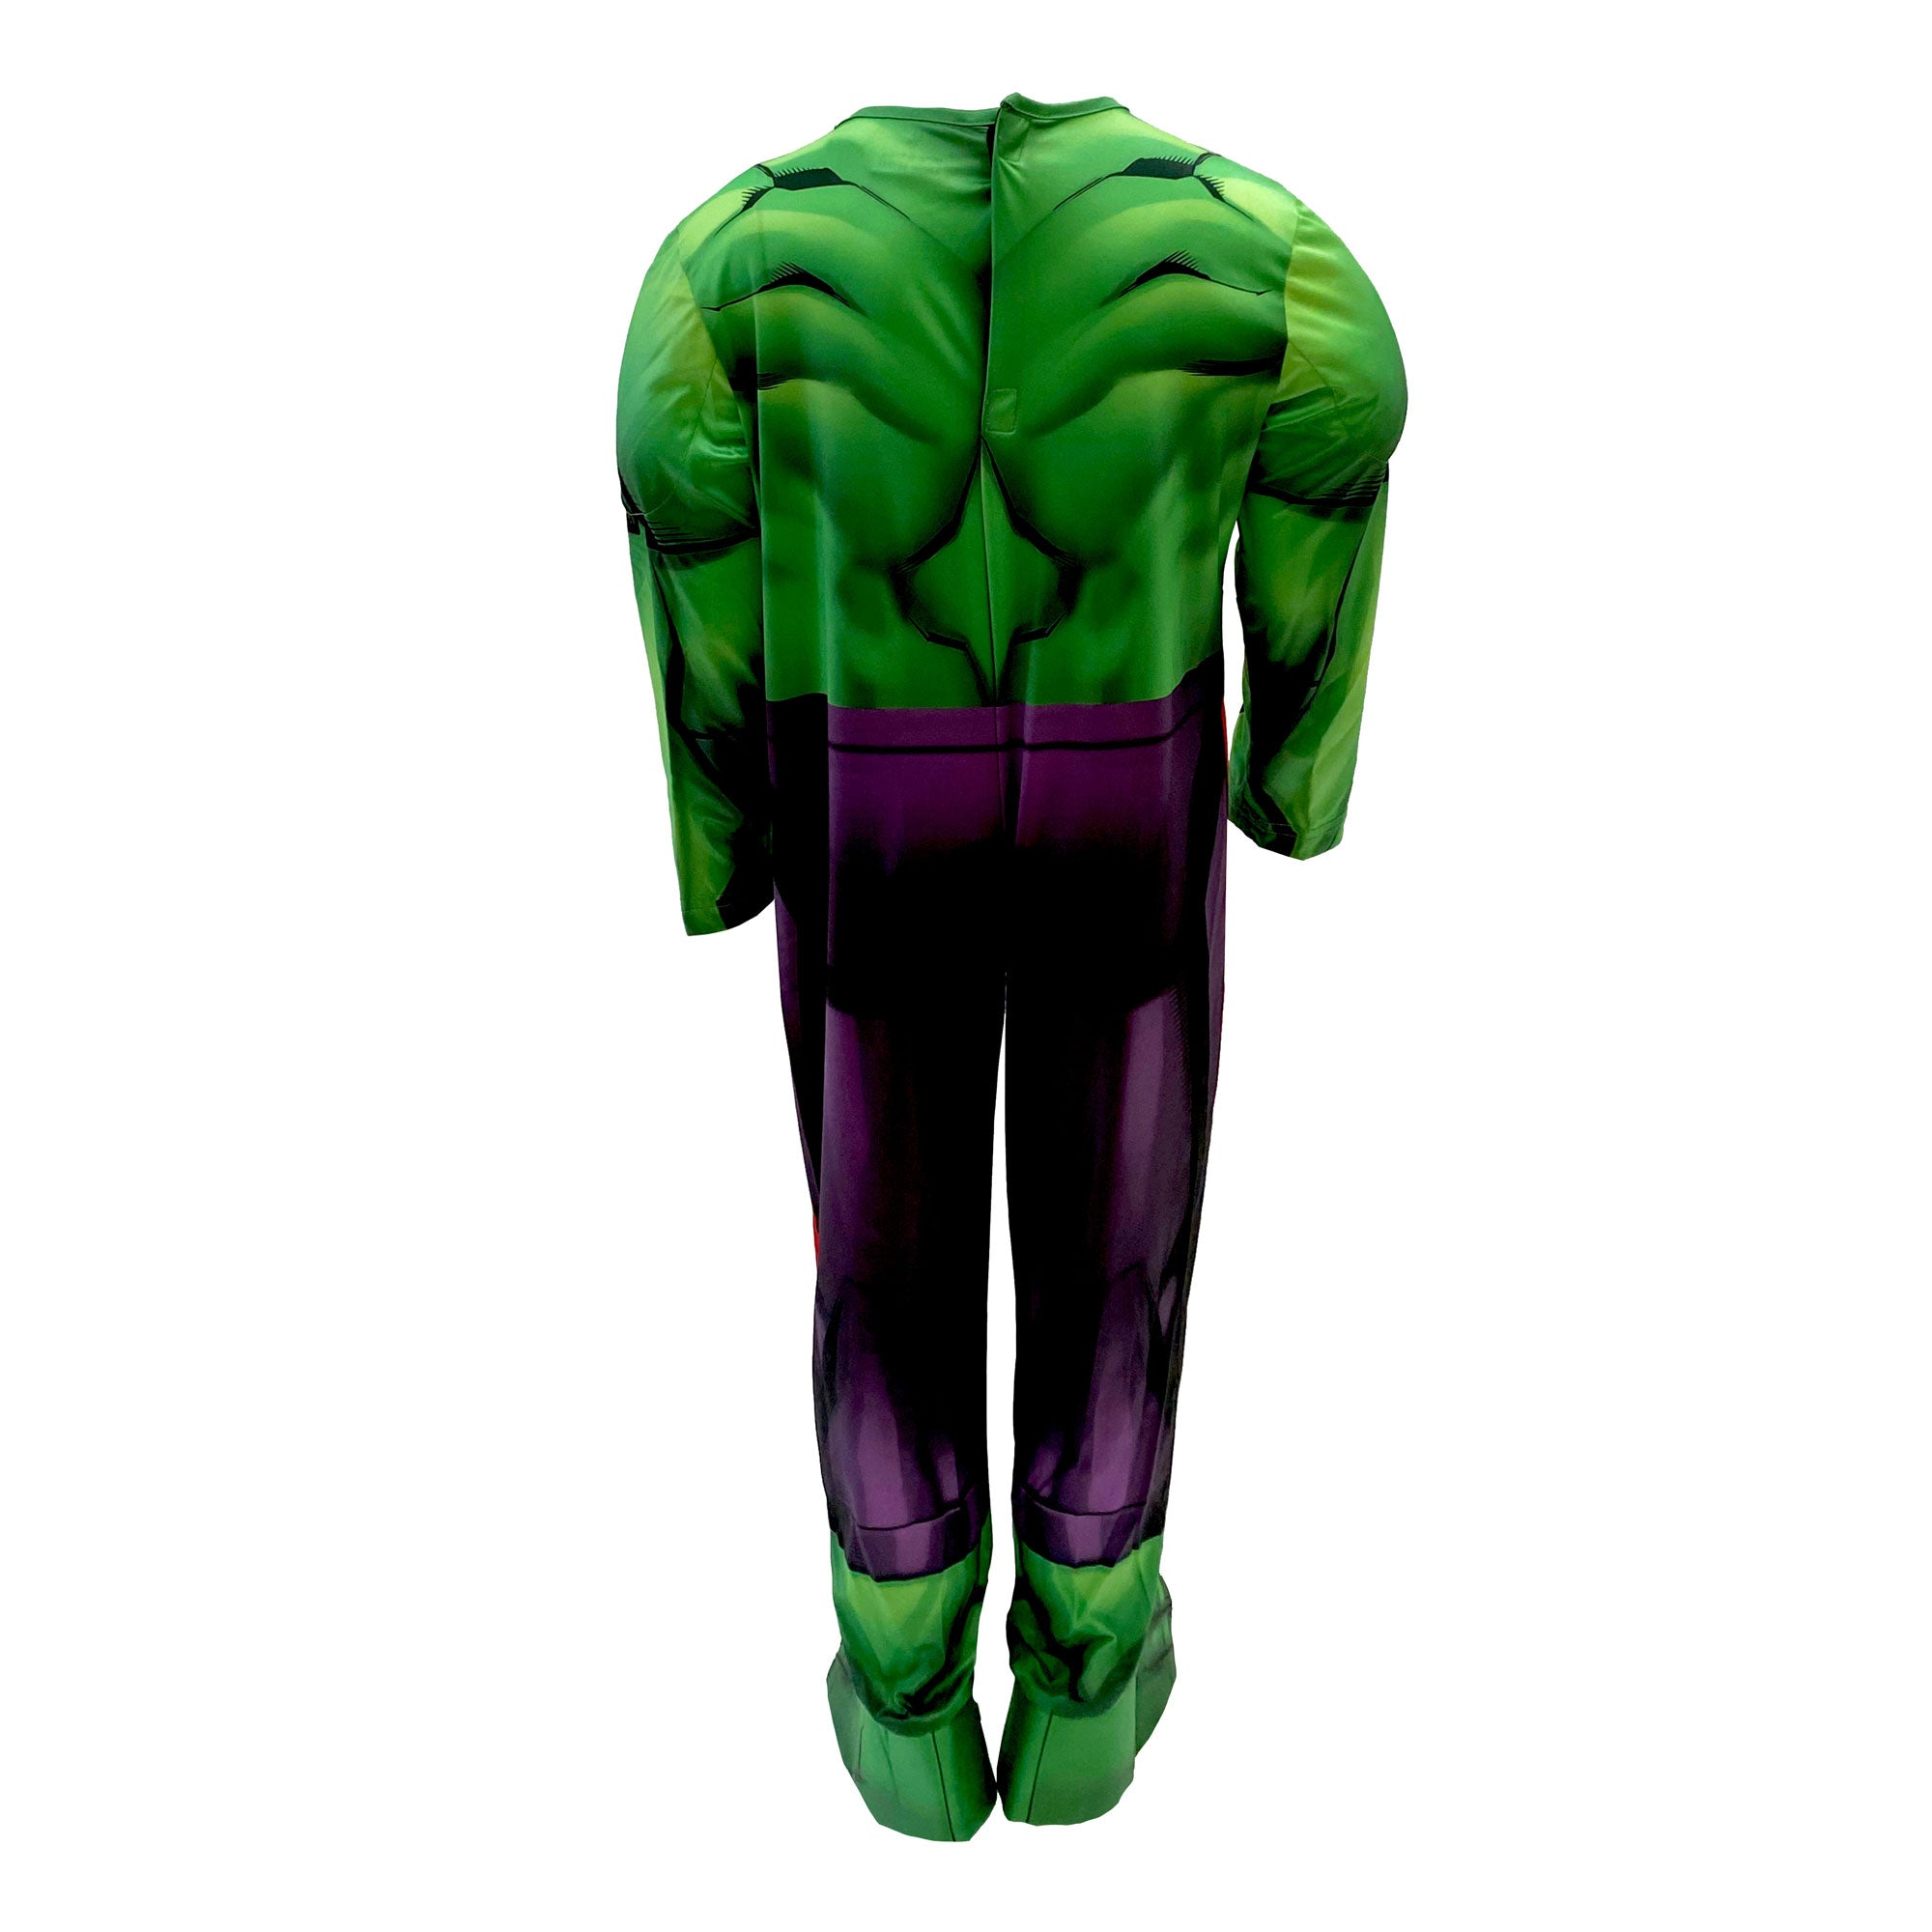 Deluxe Toddler Incredible Hulk Costume